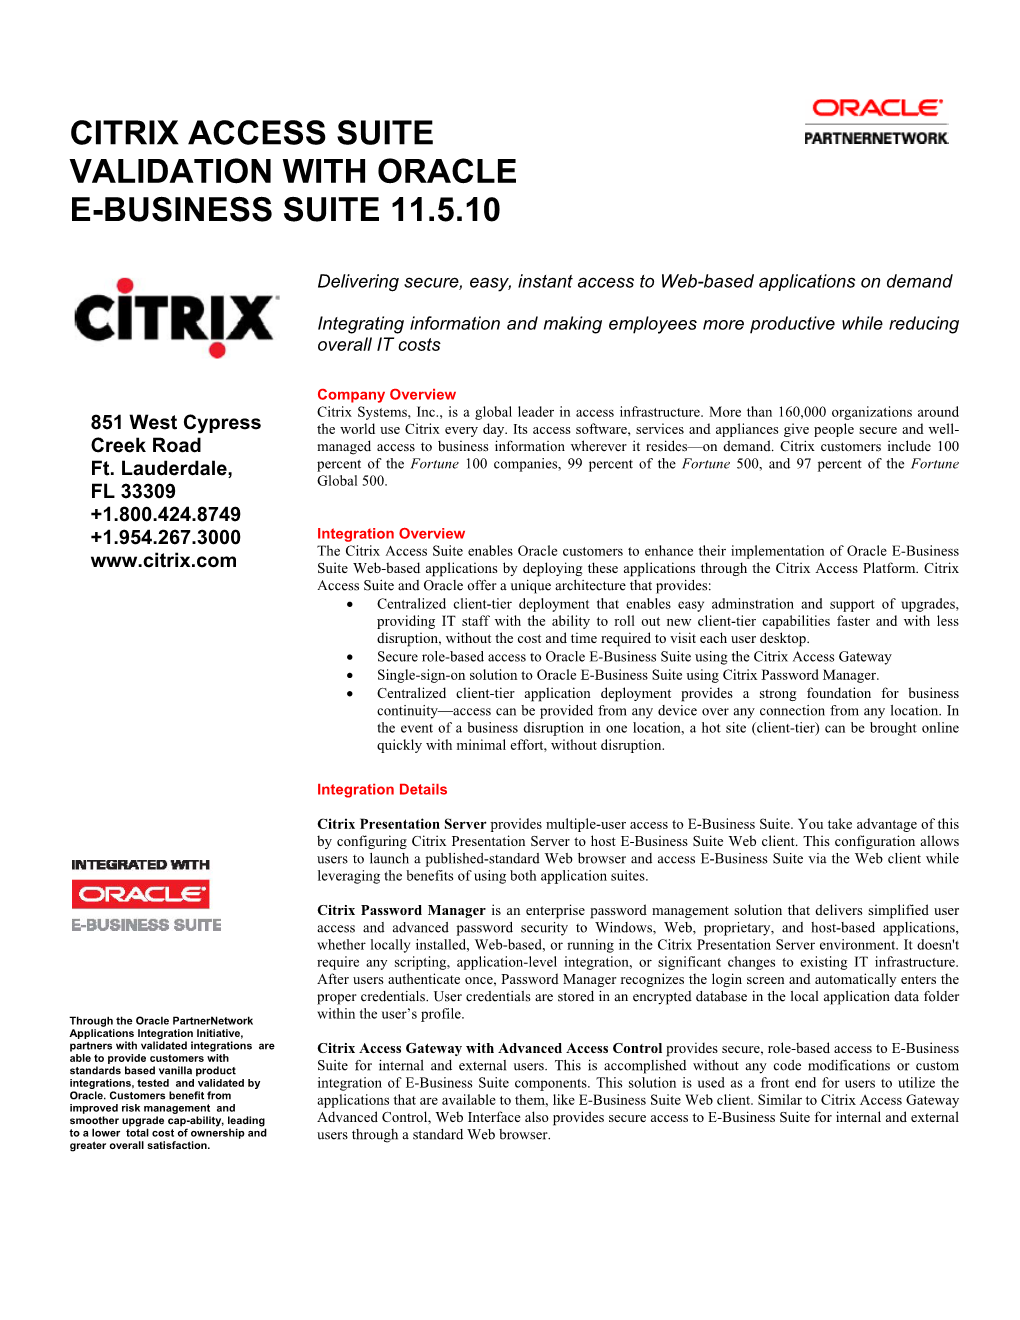 Citrix Access Suite Validation with Oracle E-Business Suite 11.5.10